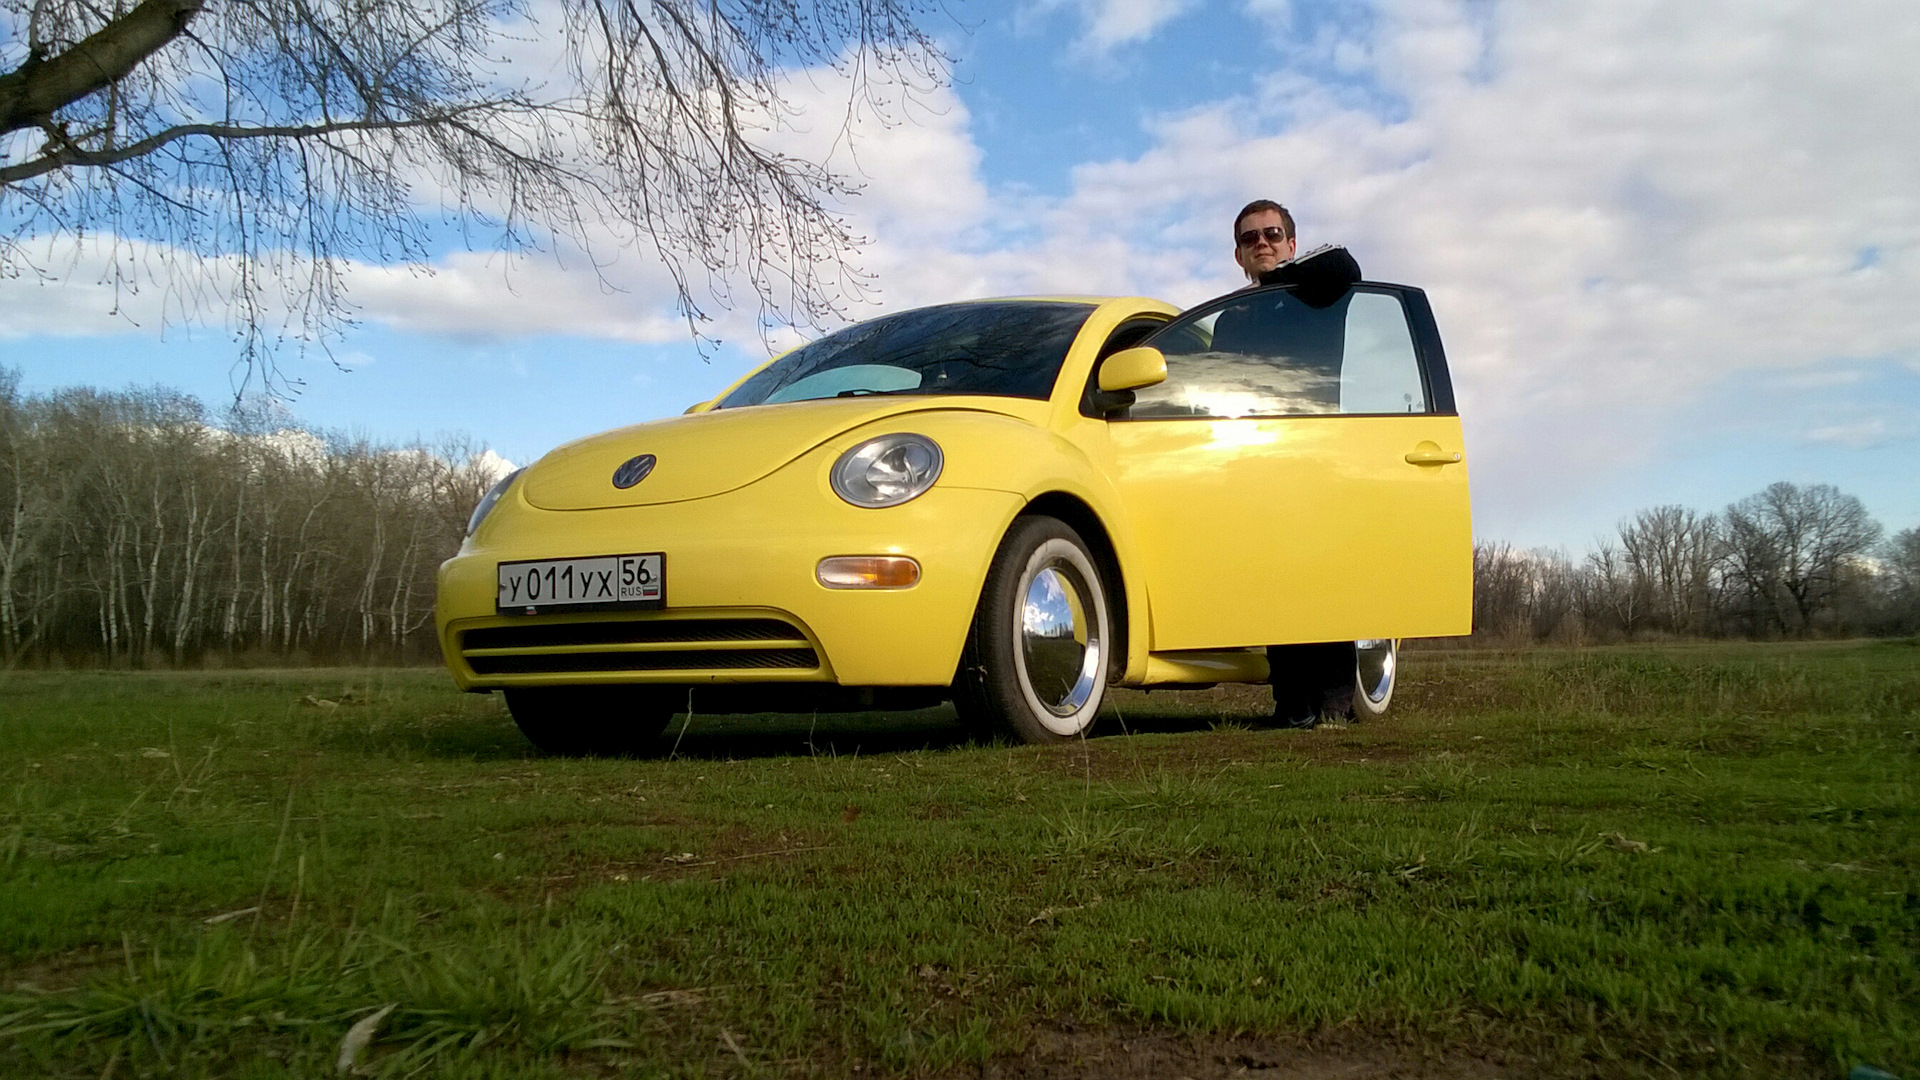 Volkswagen желтый. Фольксваген Нью Битл жёлтый. Желтый Жук автомобиль Фольксваген 2. Машина Beetle желтая. Фольксваген Жук желтый старый.